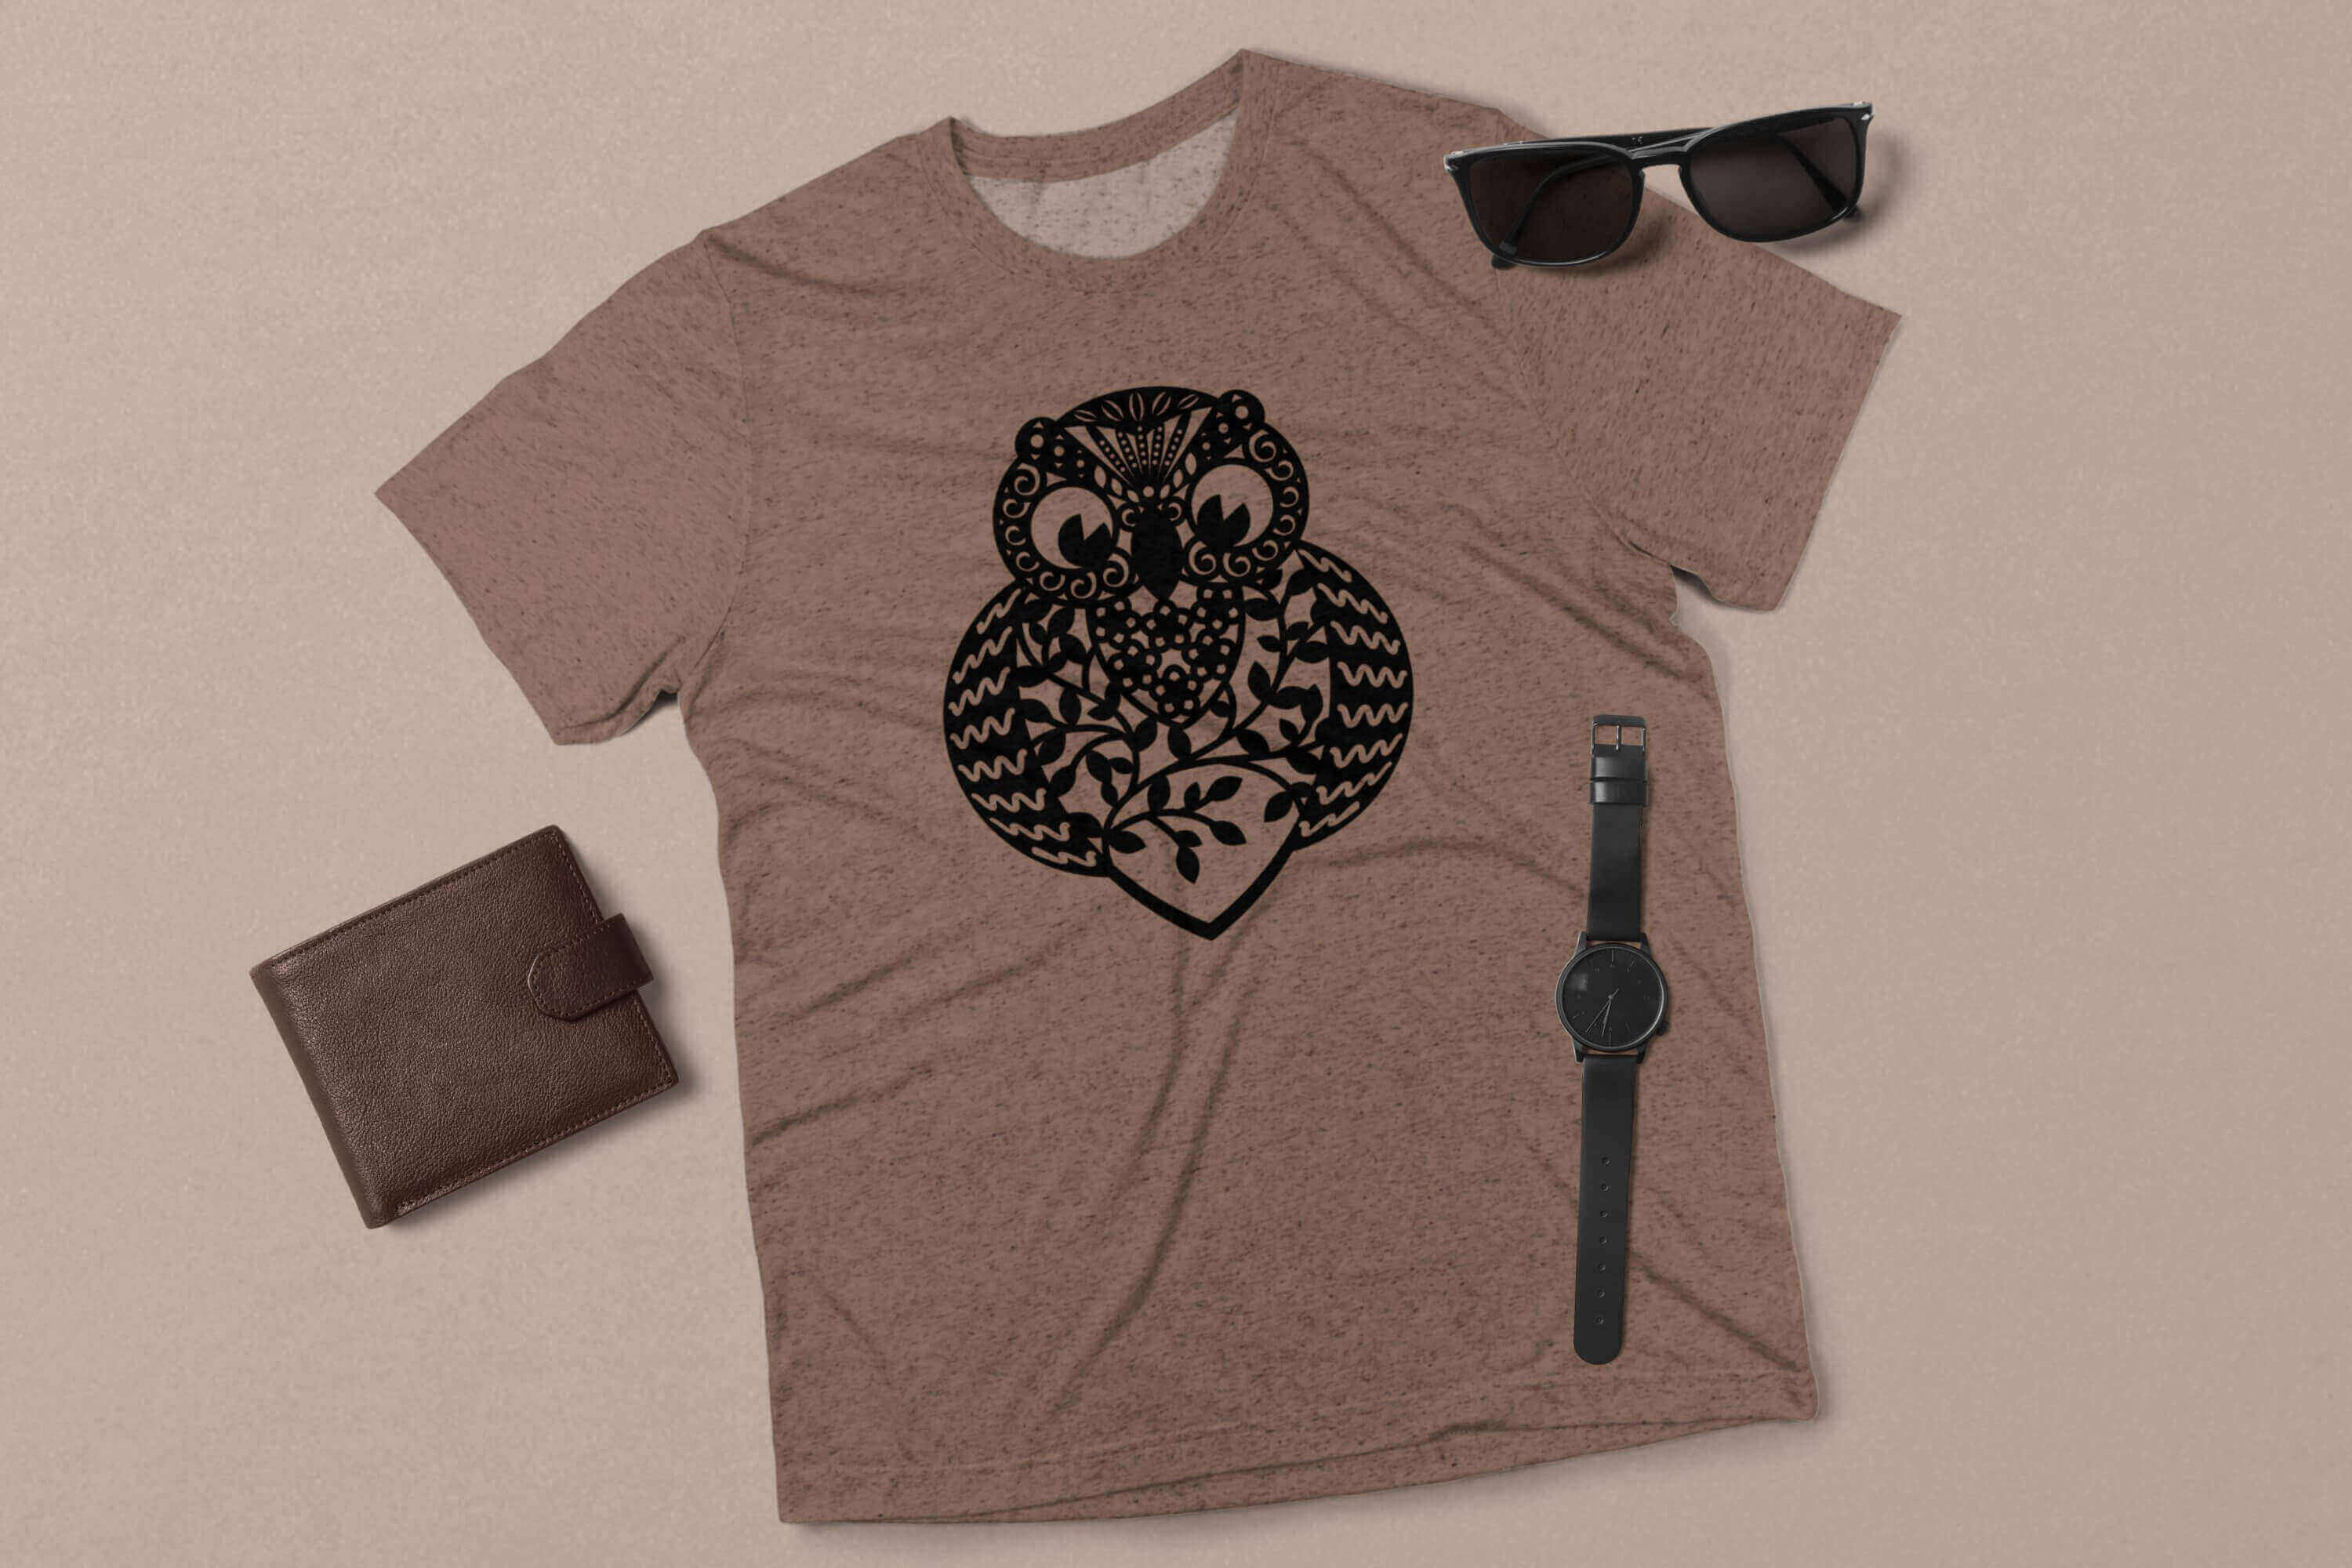 Black Owl on the T-shirt.